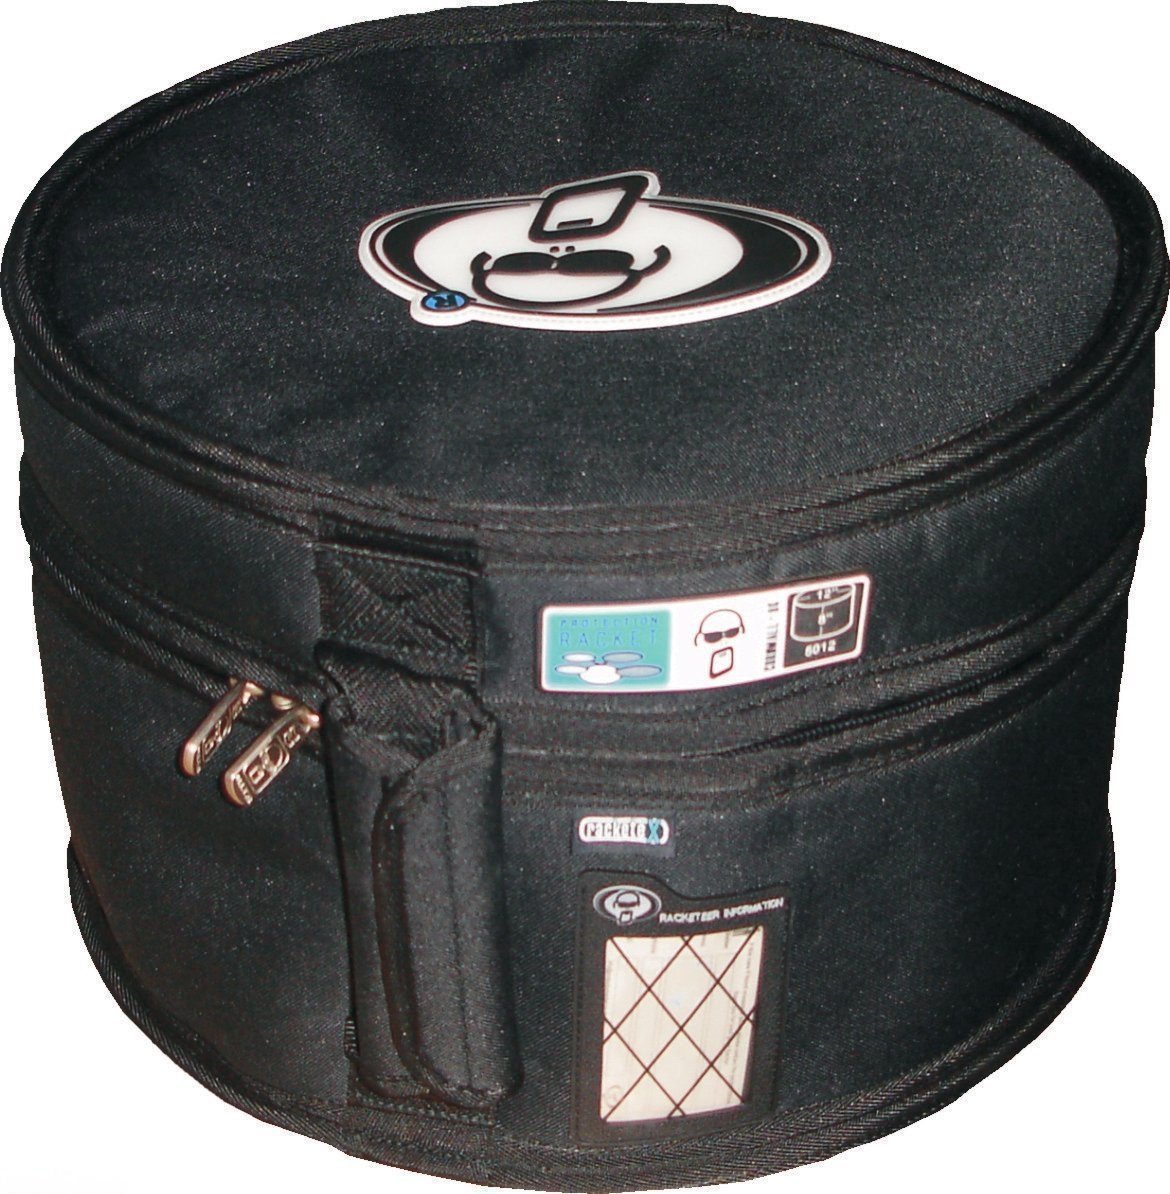 Tom-Tom Drum Bag Protection Racket 5107R-00 Tom-Tom Drum Bag